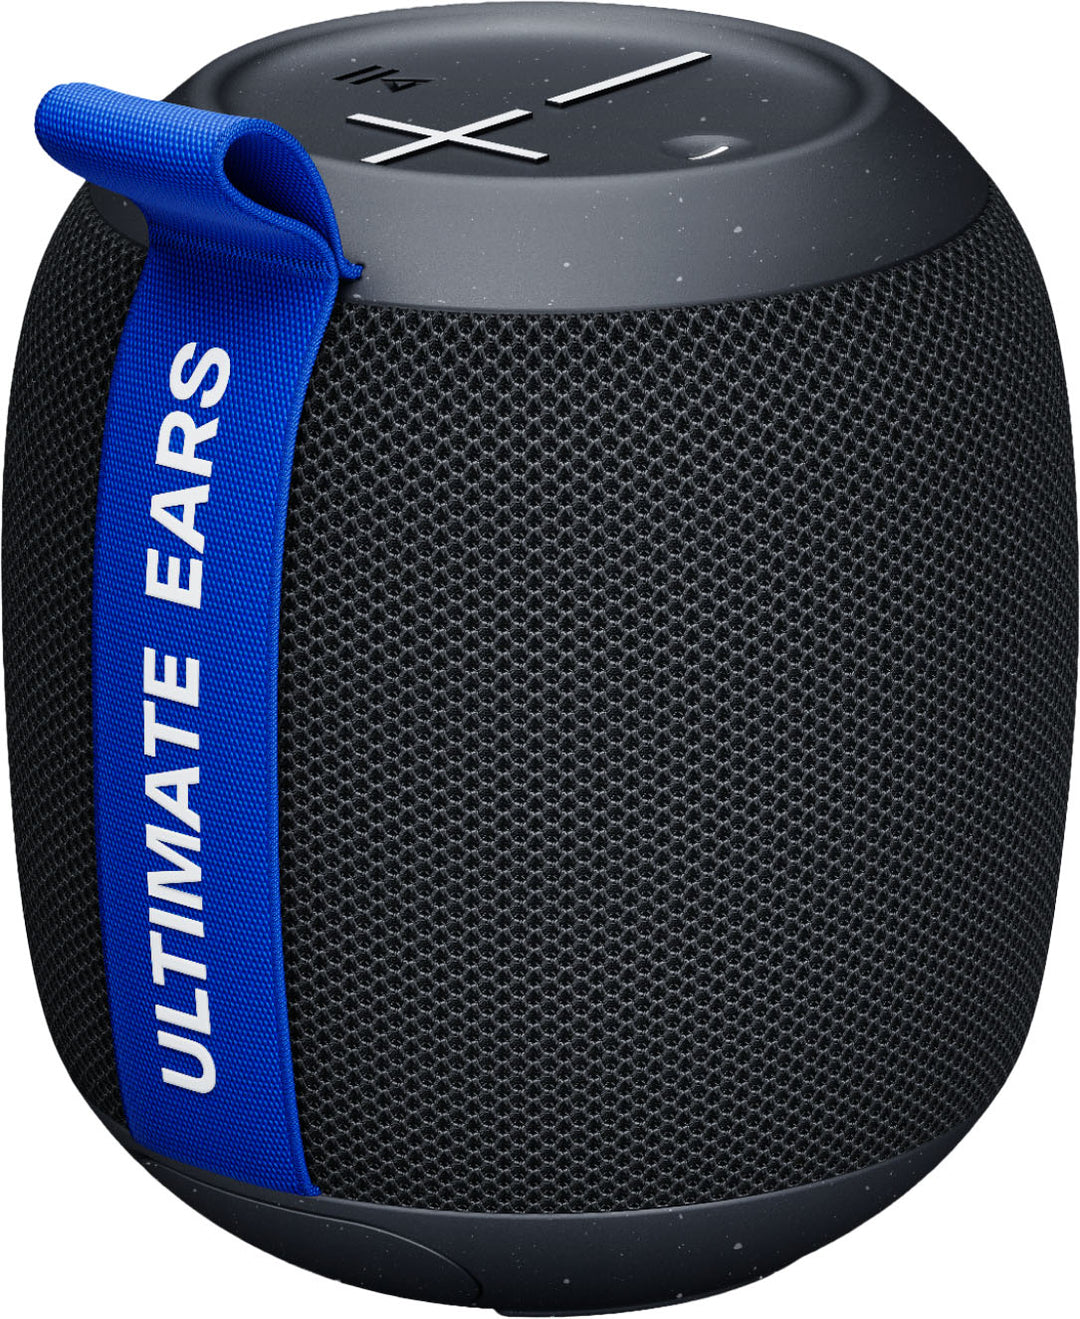 Ultimate Ears - WONDERBOOM PLAY Portable Wireless Bluetooth Mini Speaker with Waterproof, Dustproof and Floatable design - Black_0